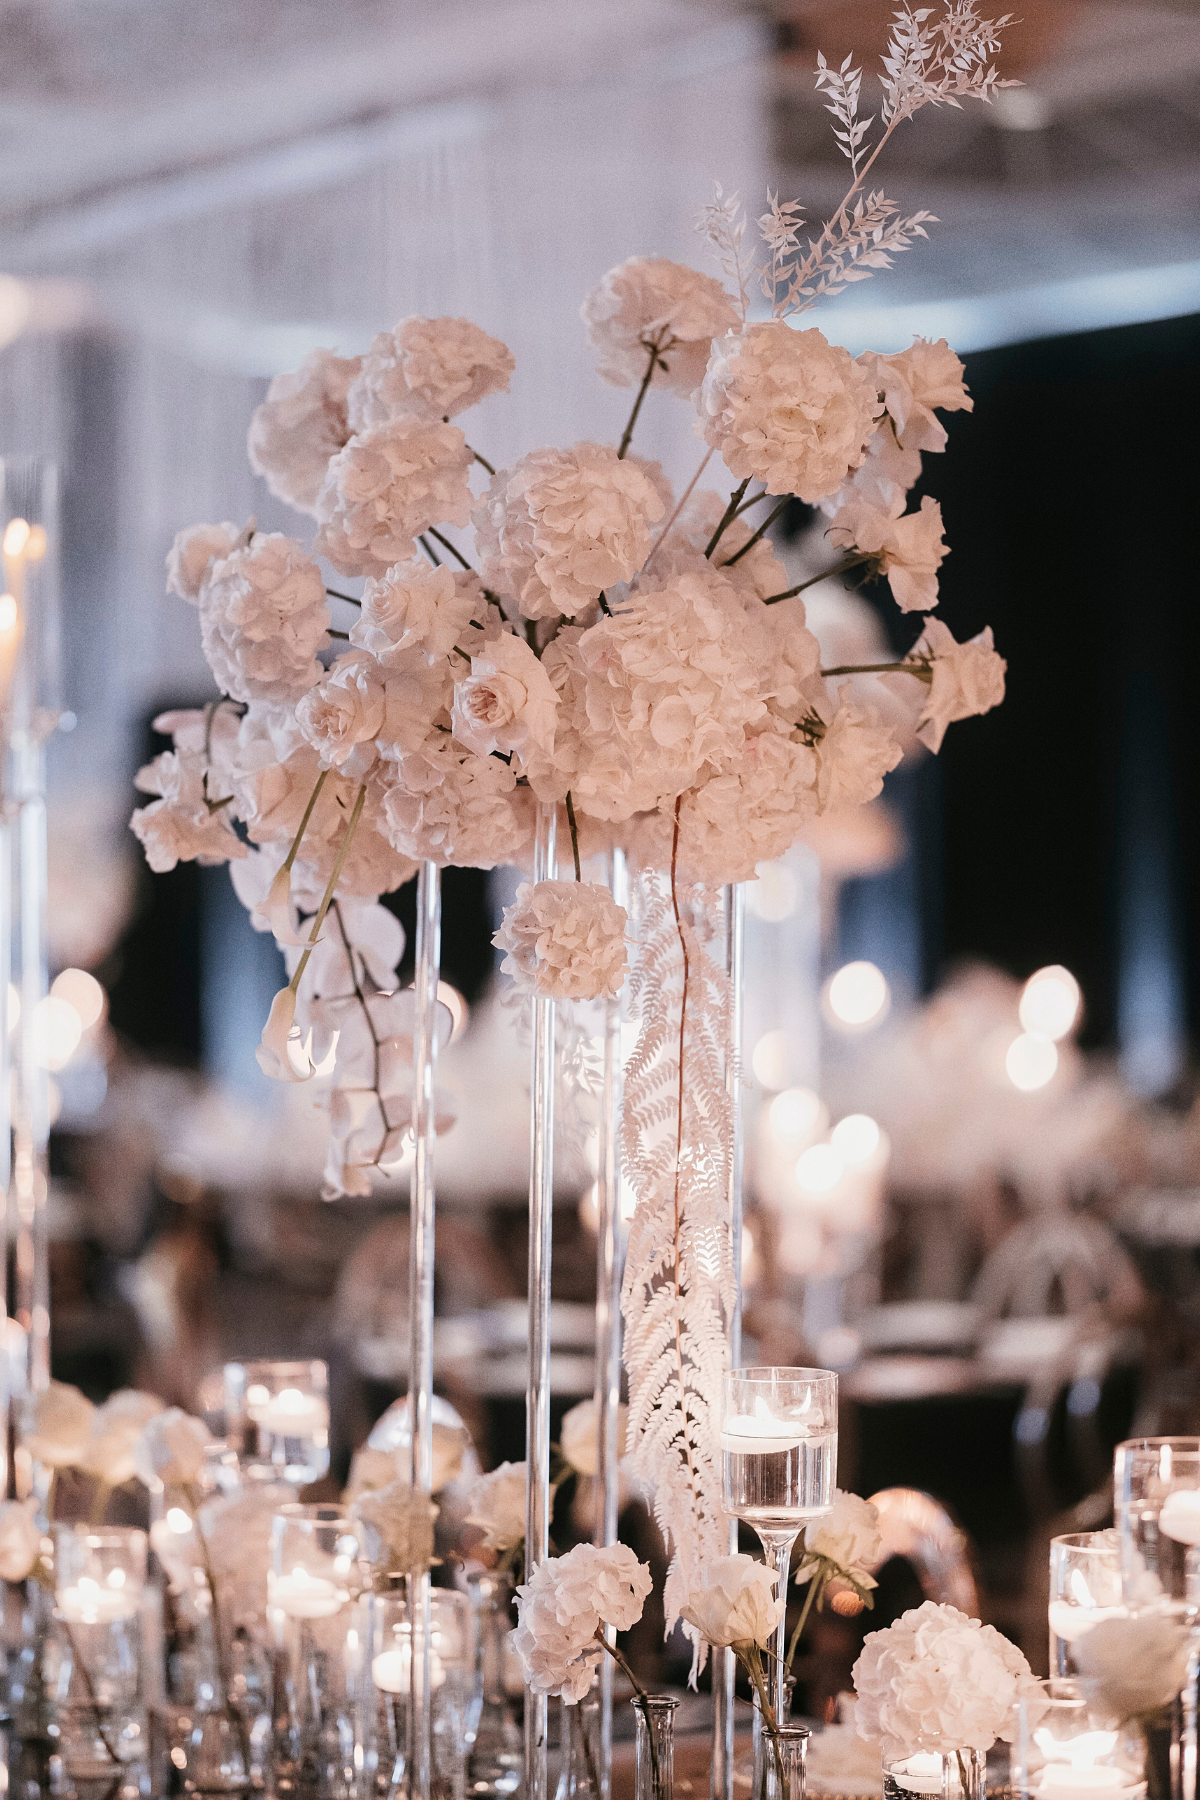 kavita-mohan-black-white-reception-candles-flowers-hydrangea-roses